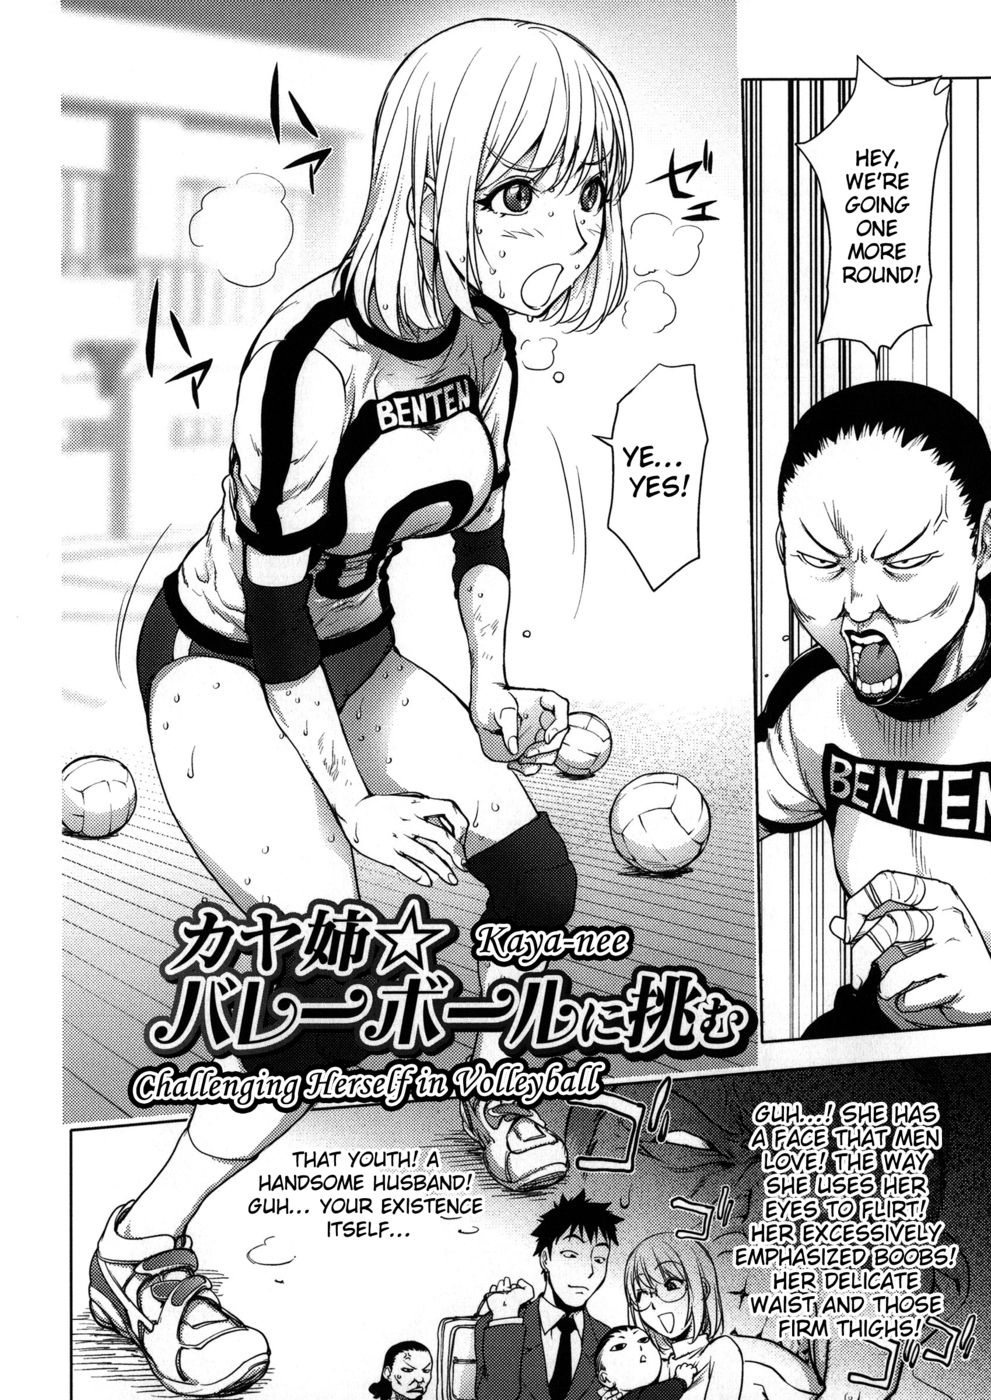 Hentai Manga Comic-Kaye-nee Challenging Herself in Volleyball-Read-2